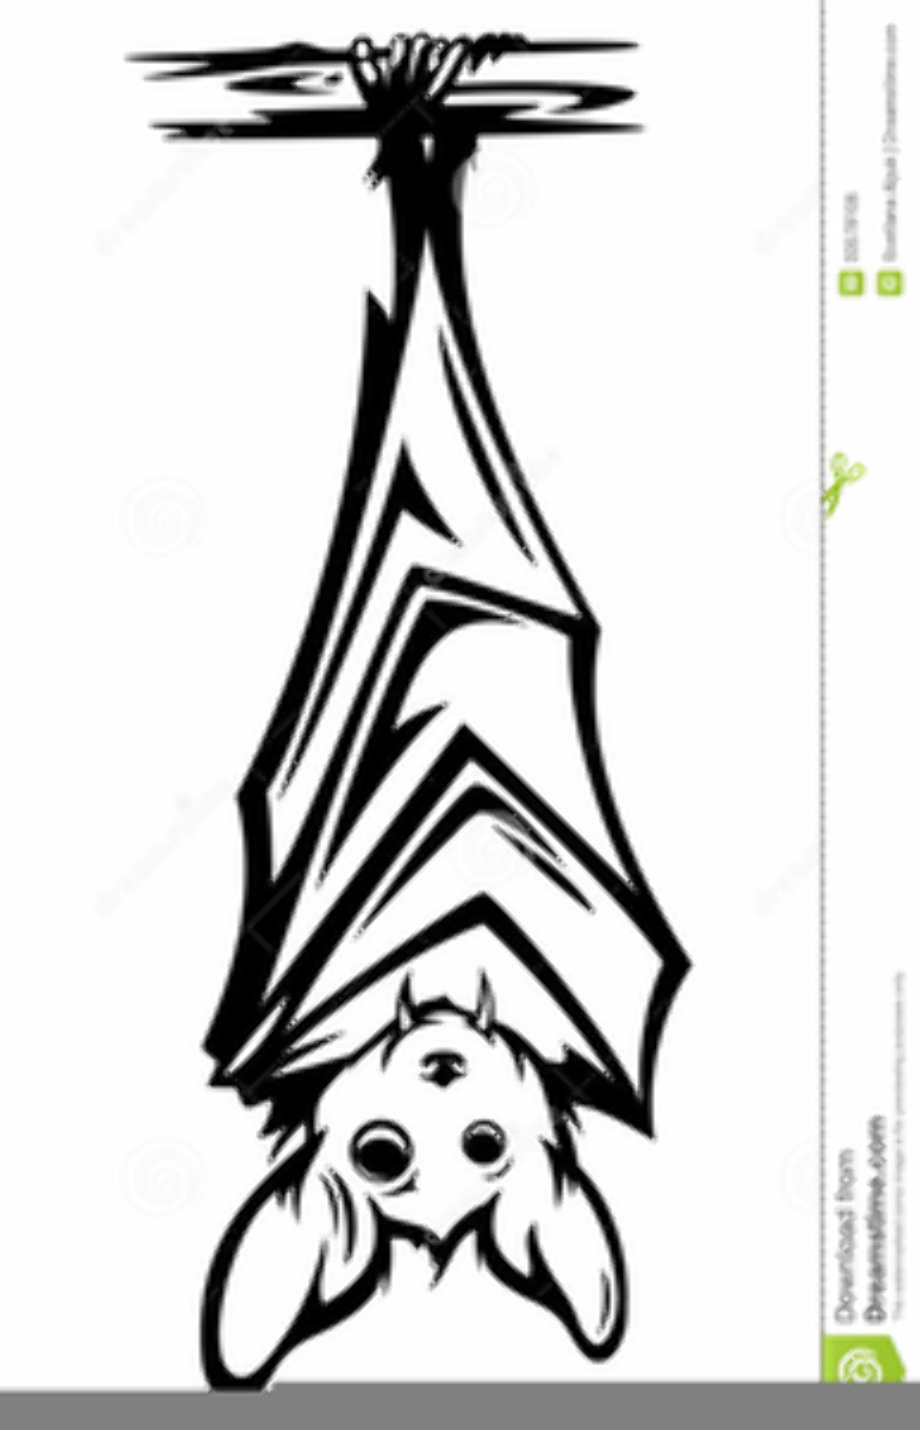 Bat upside down